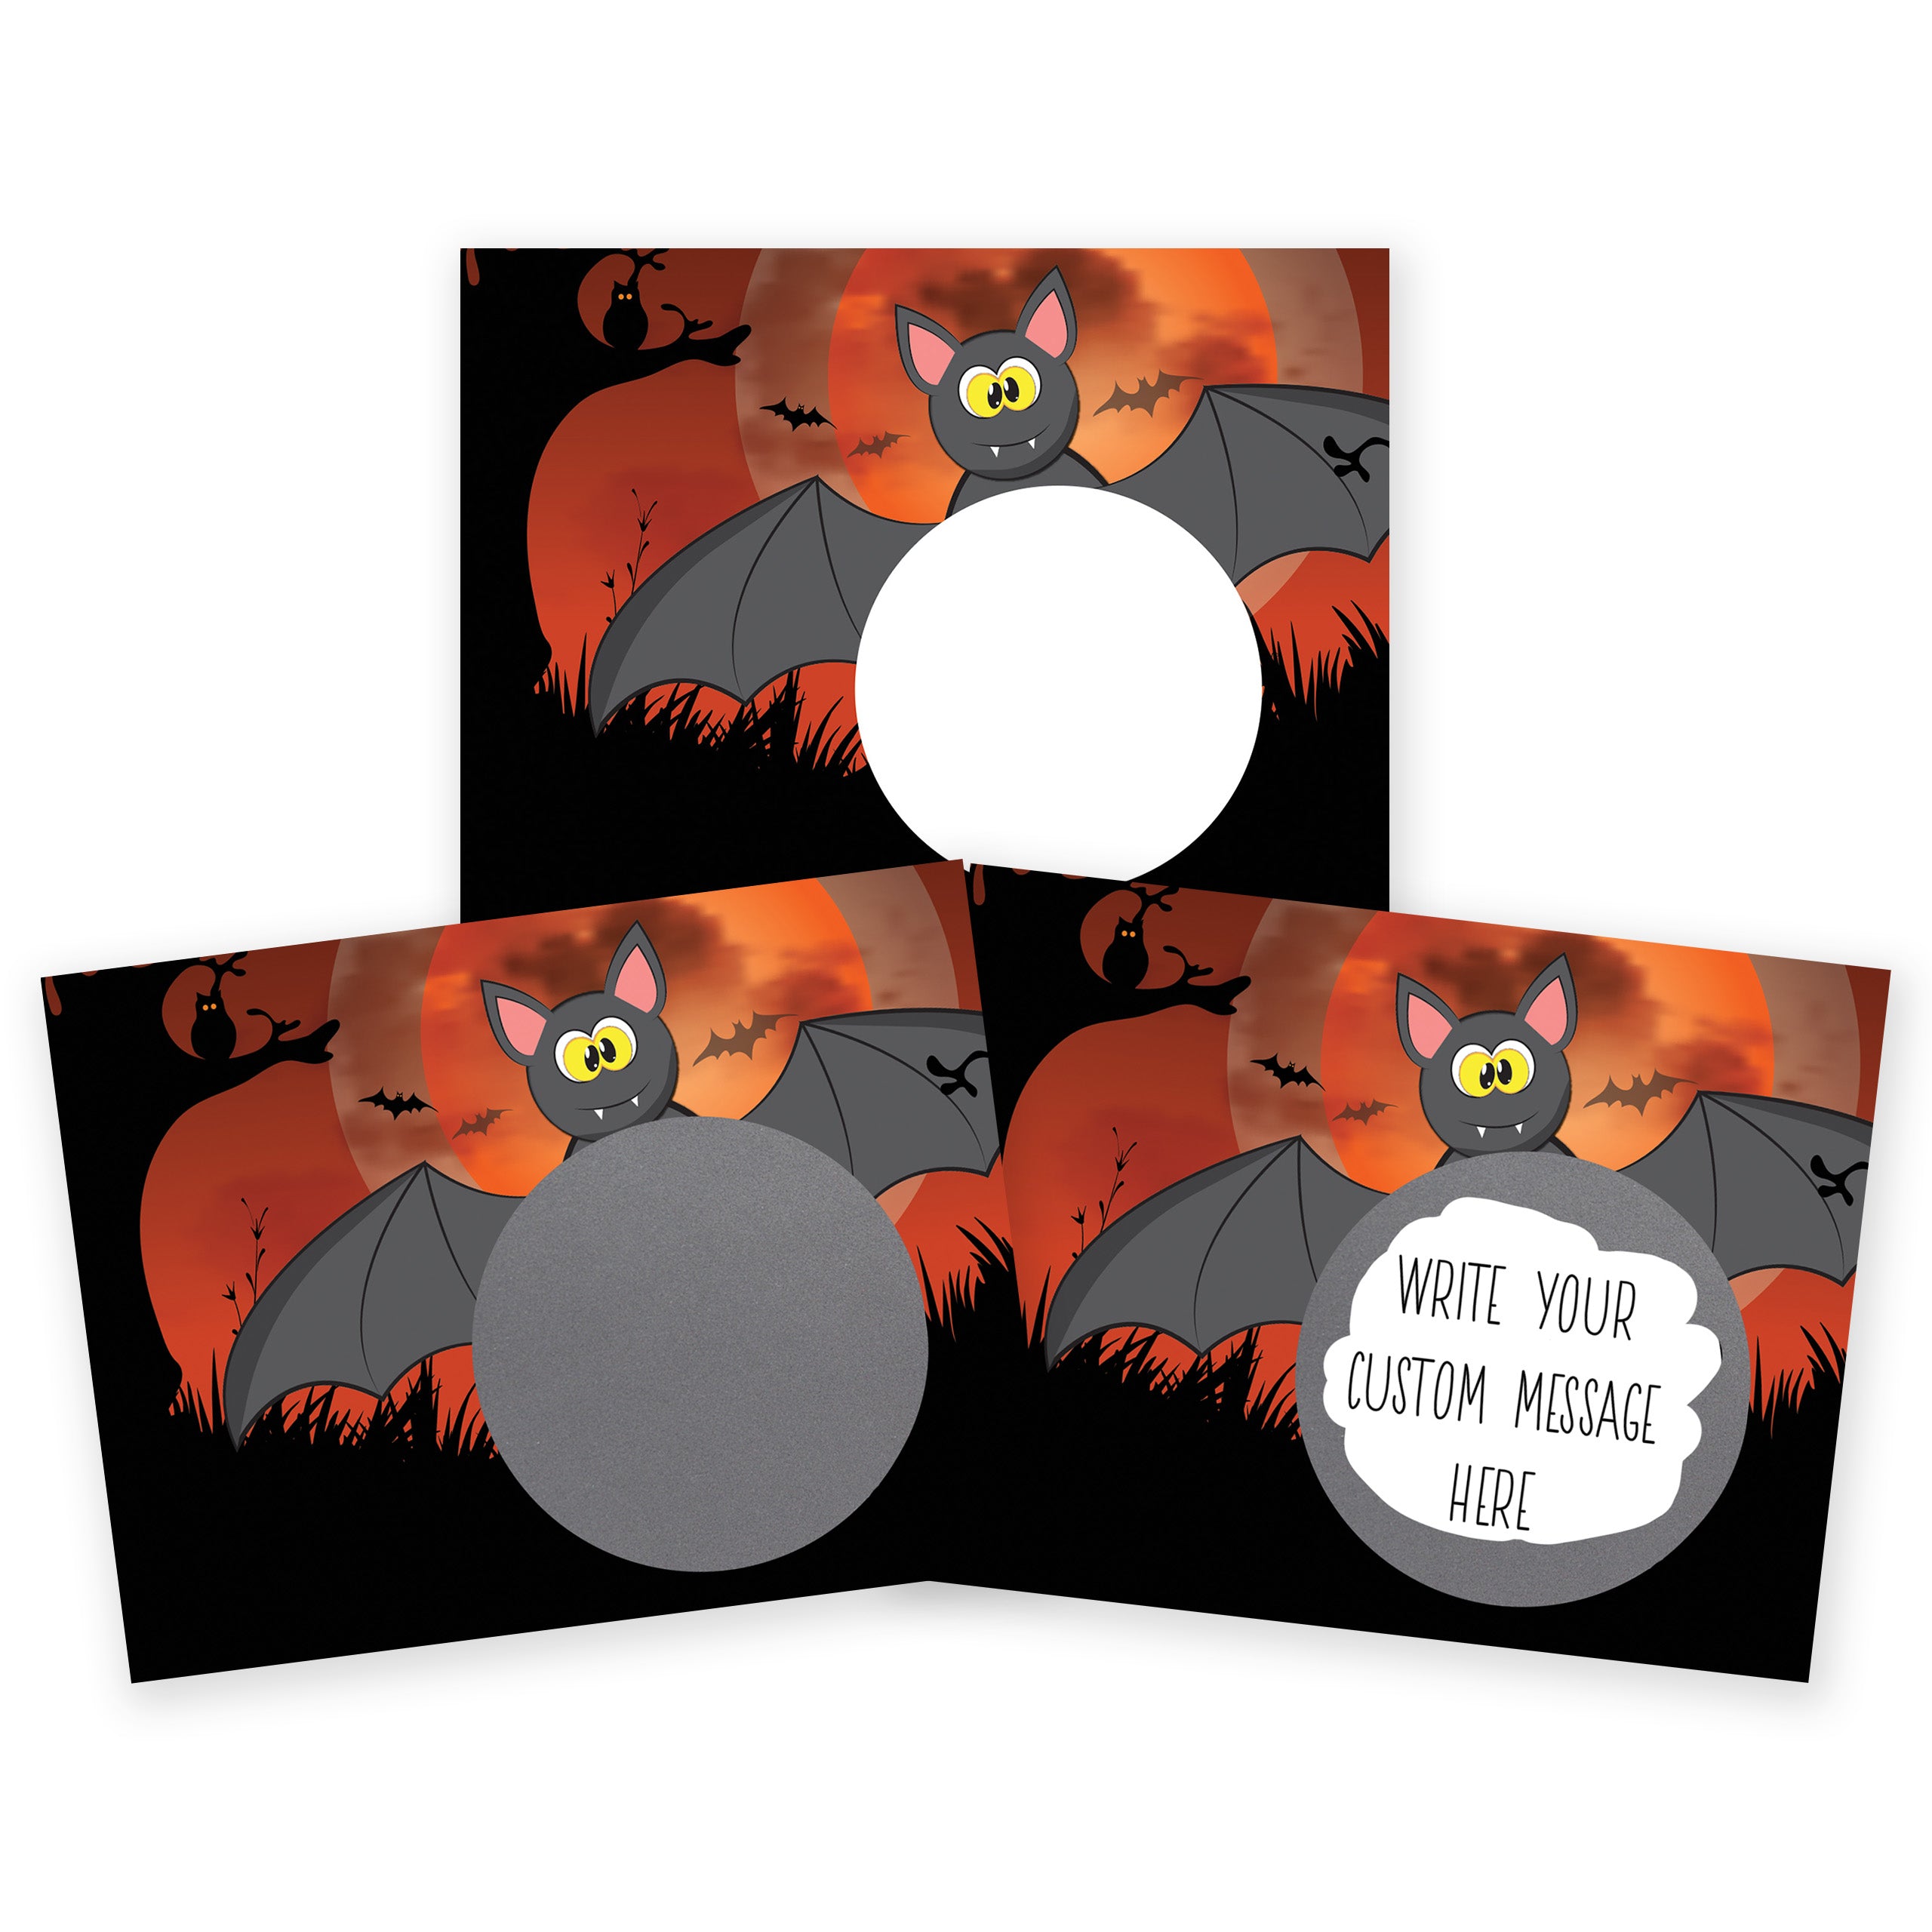 DIY Halloween Bat Make Your Own Scratch Offs - 20 Cards and 20 Scratch Off Stickers - My Scratch Offs